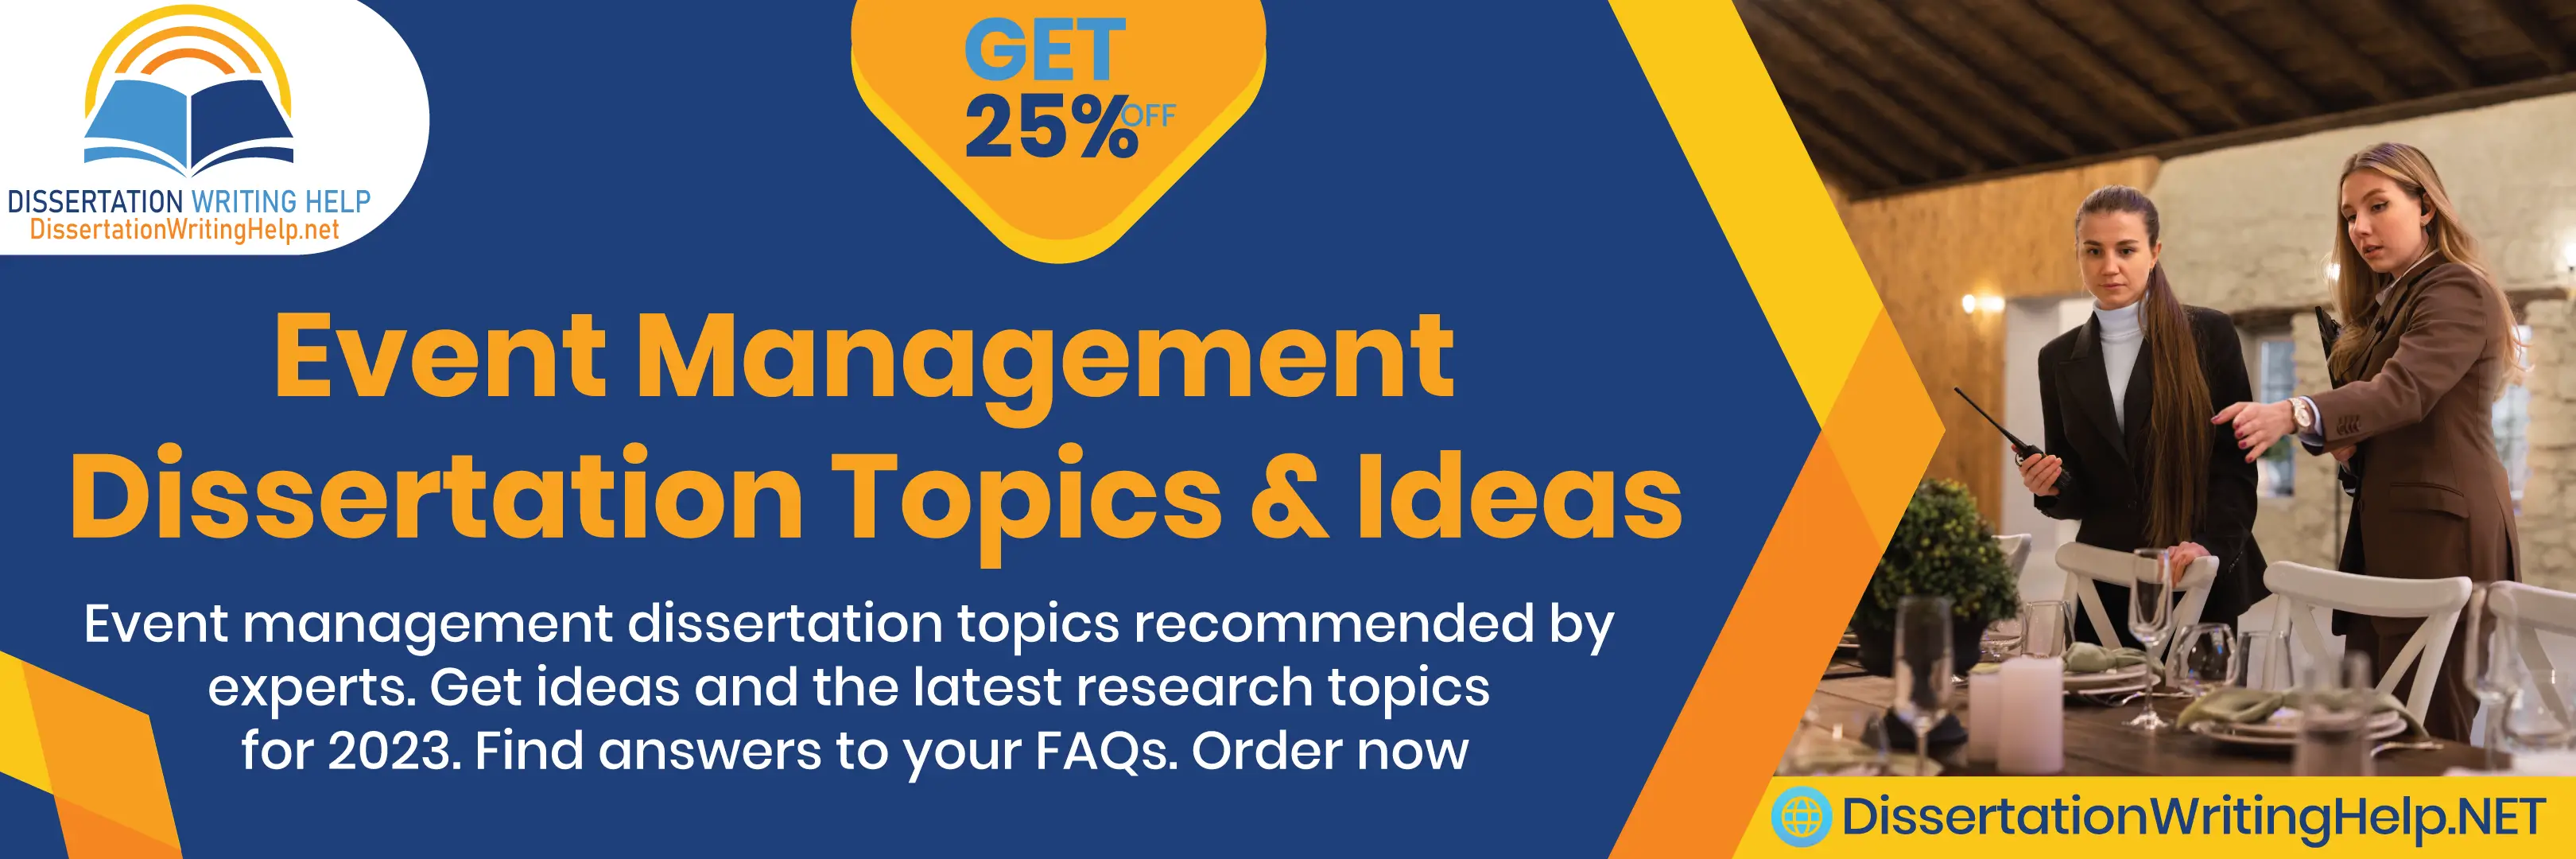 Event-Management-Dissertation-Topics-Ideas-banner.webp